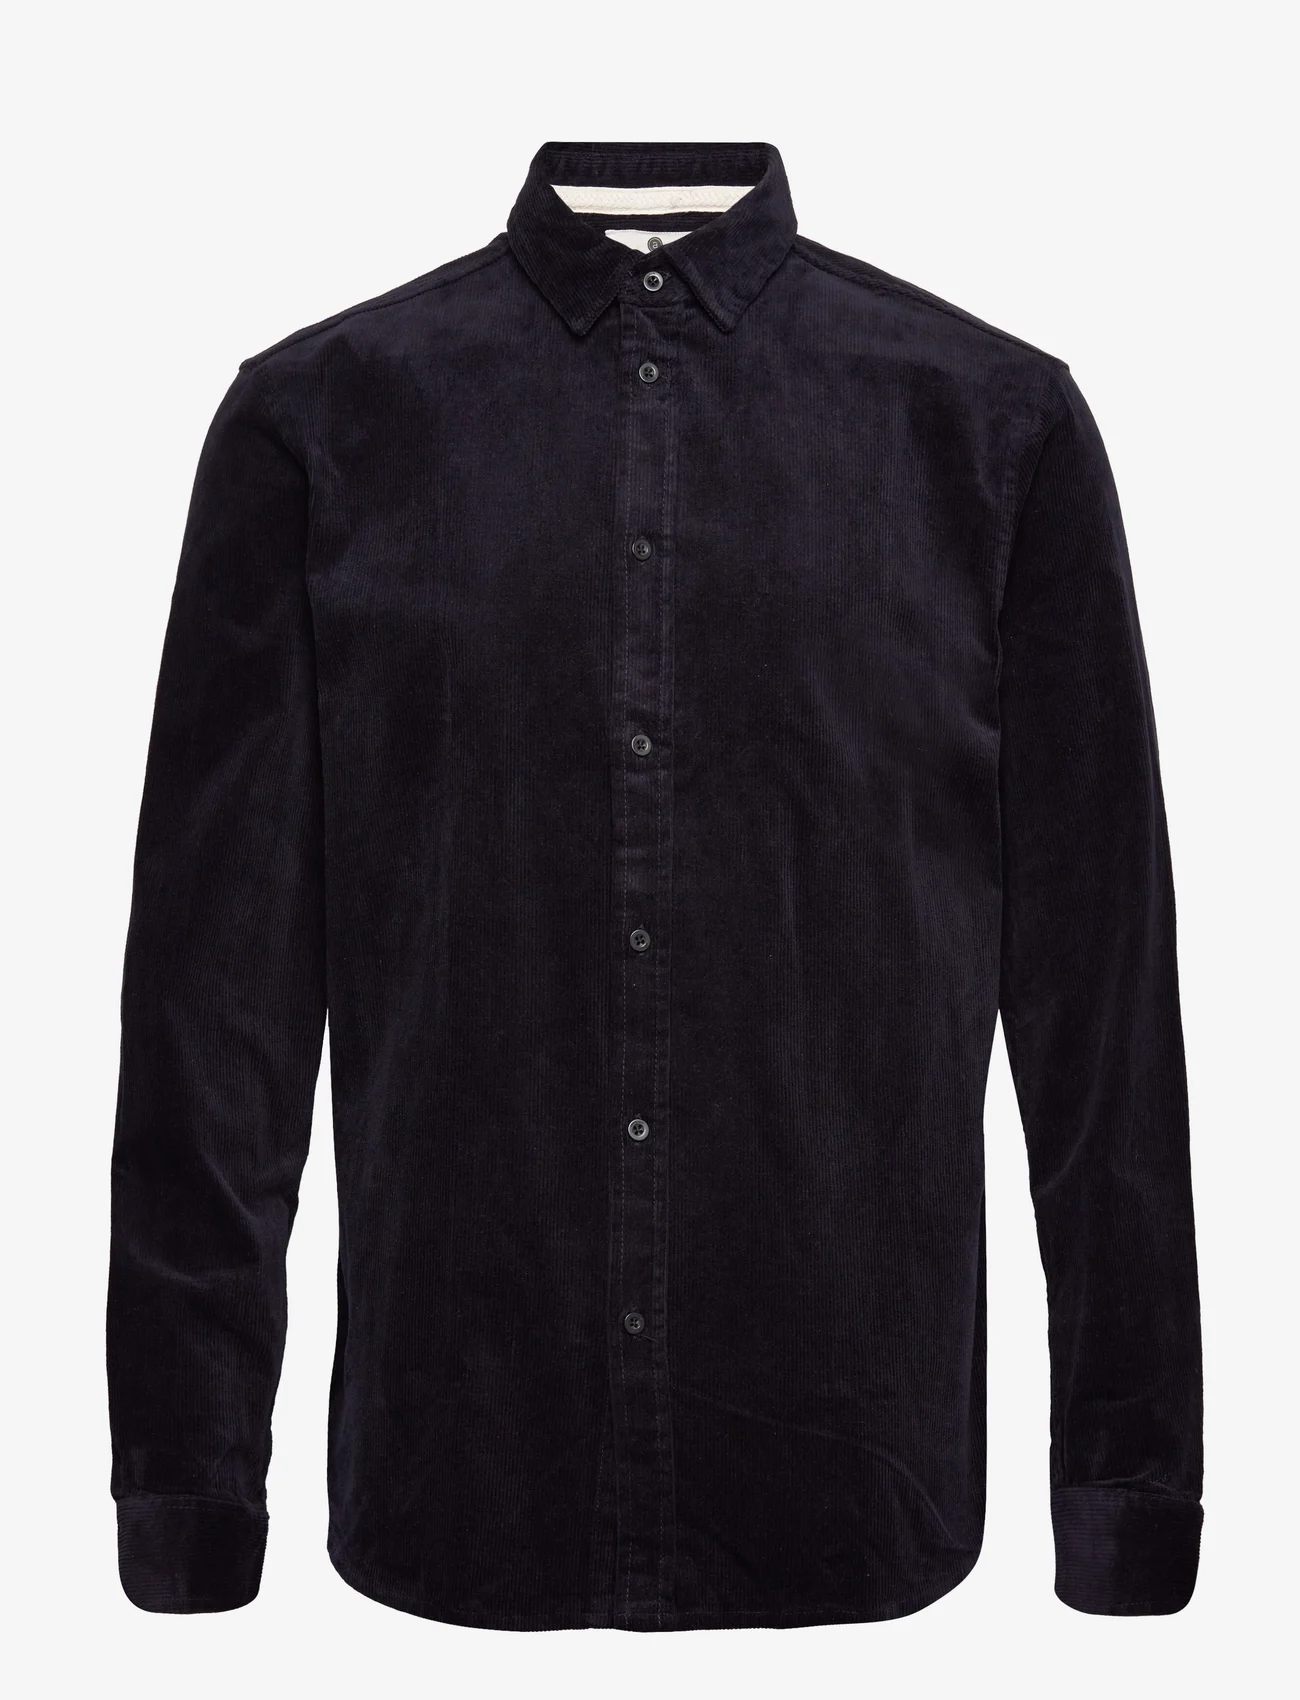 Anerkjendt - AKLEIF CORDUROY SHIRT - corduroy shirts - dark navy - 0